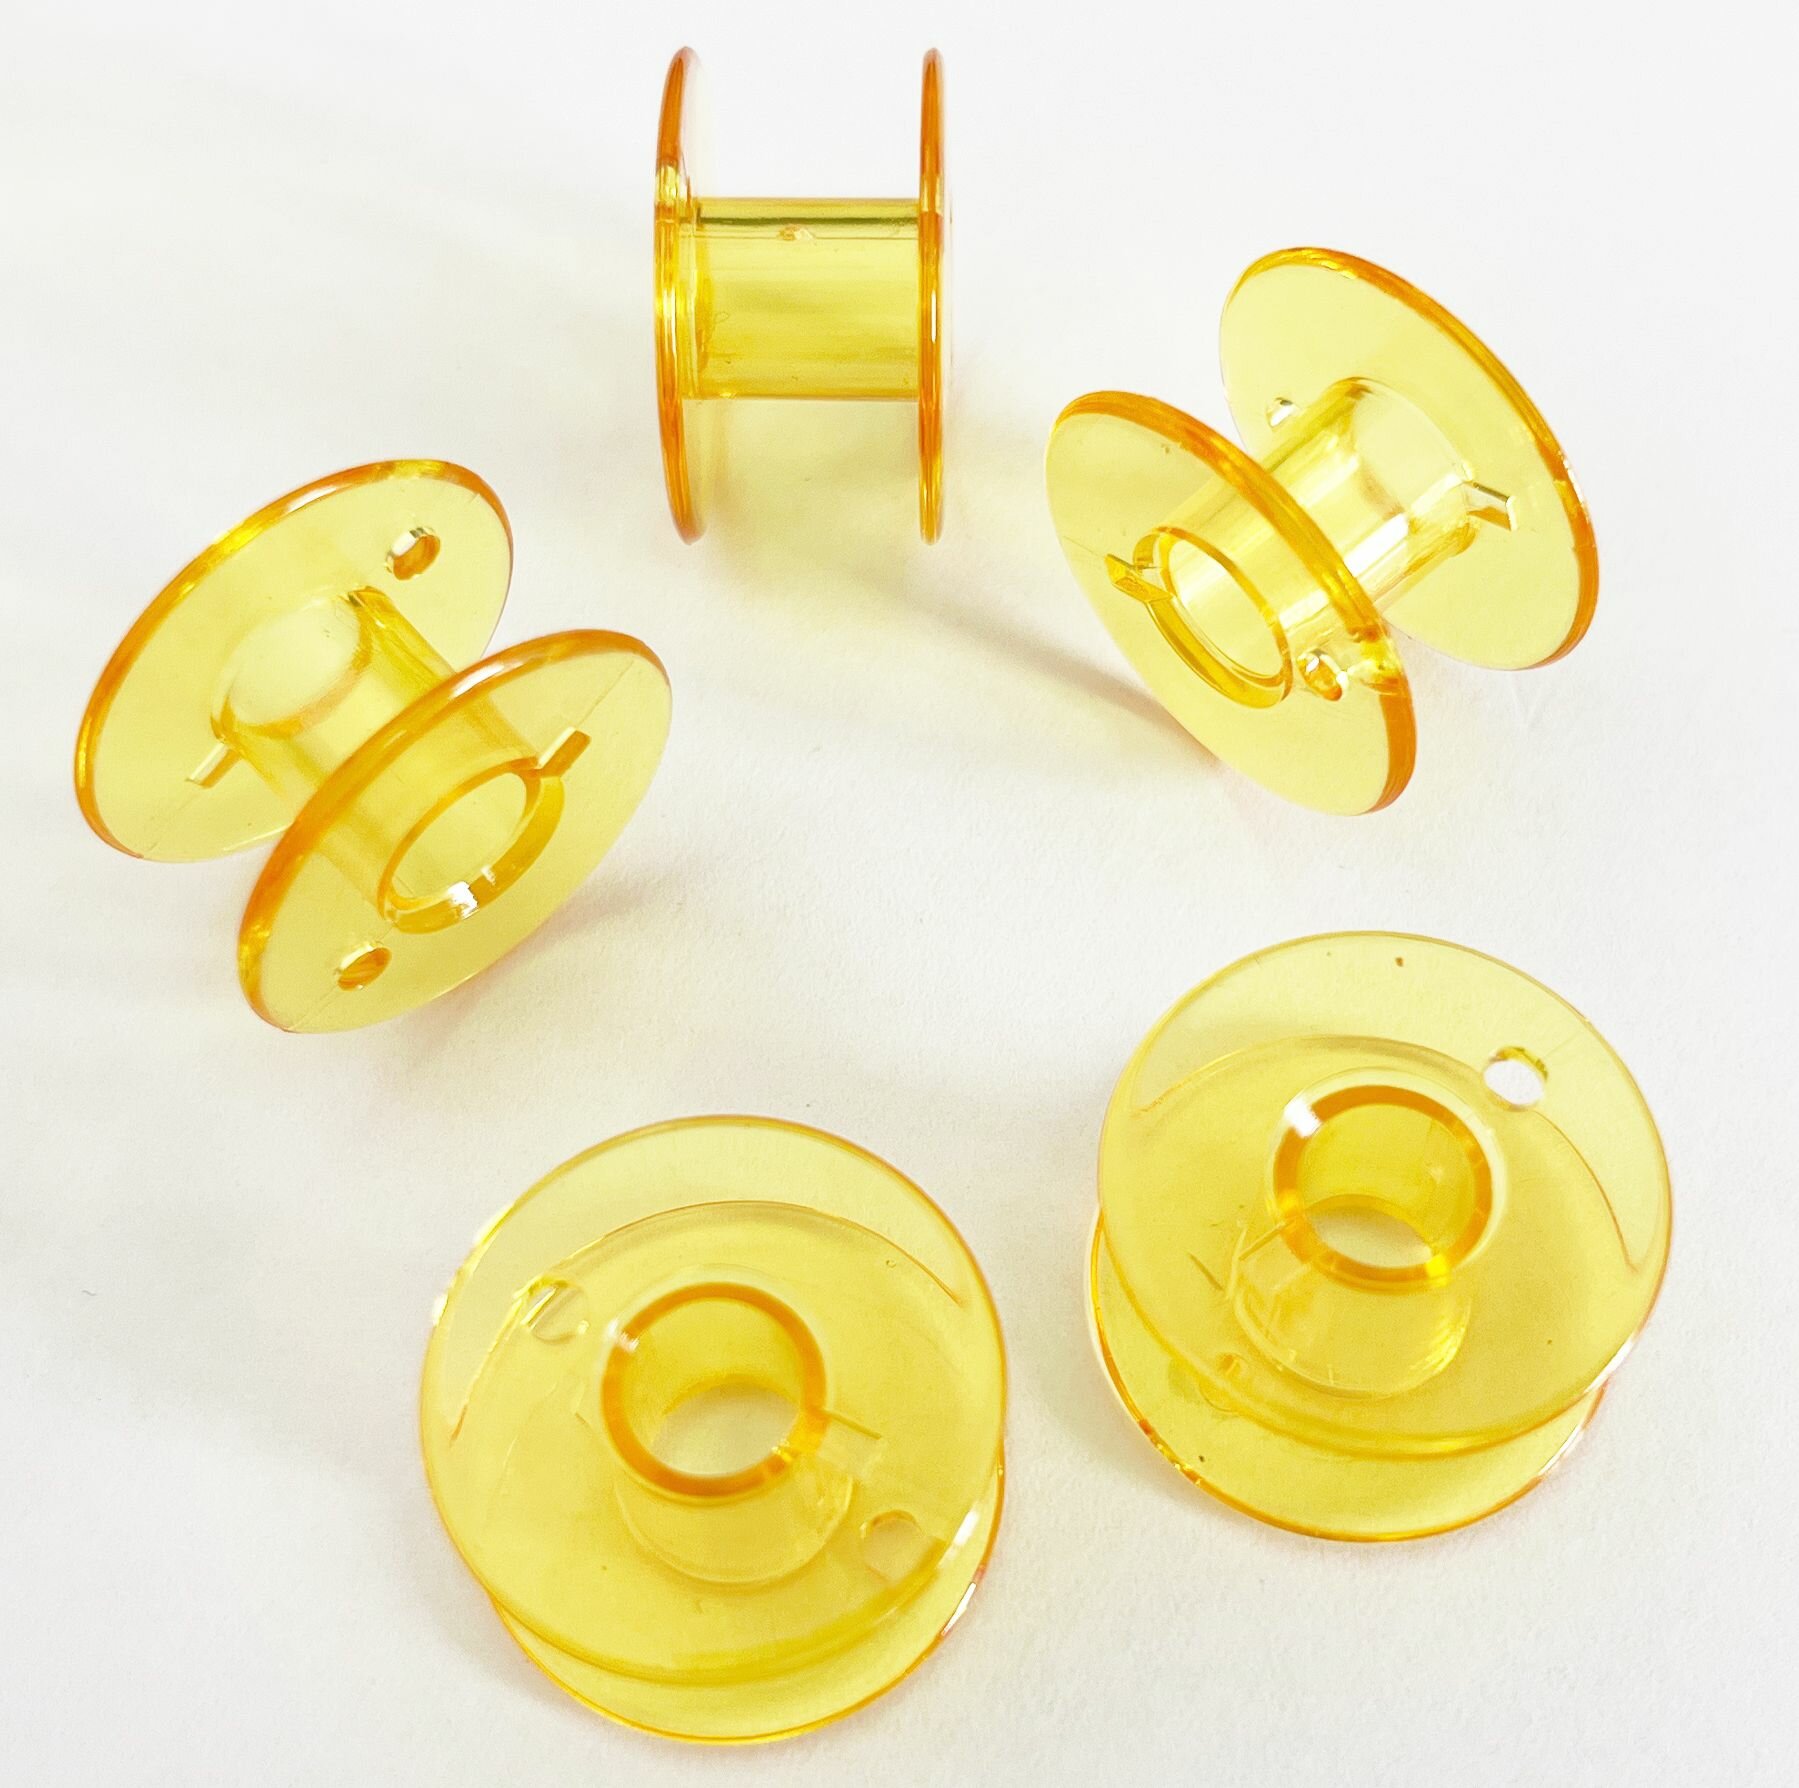 Комплект желтых шпуль (10 шт) для бытовых швейных машин JANOME, BROTHER, JUKI, BERNETTE.